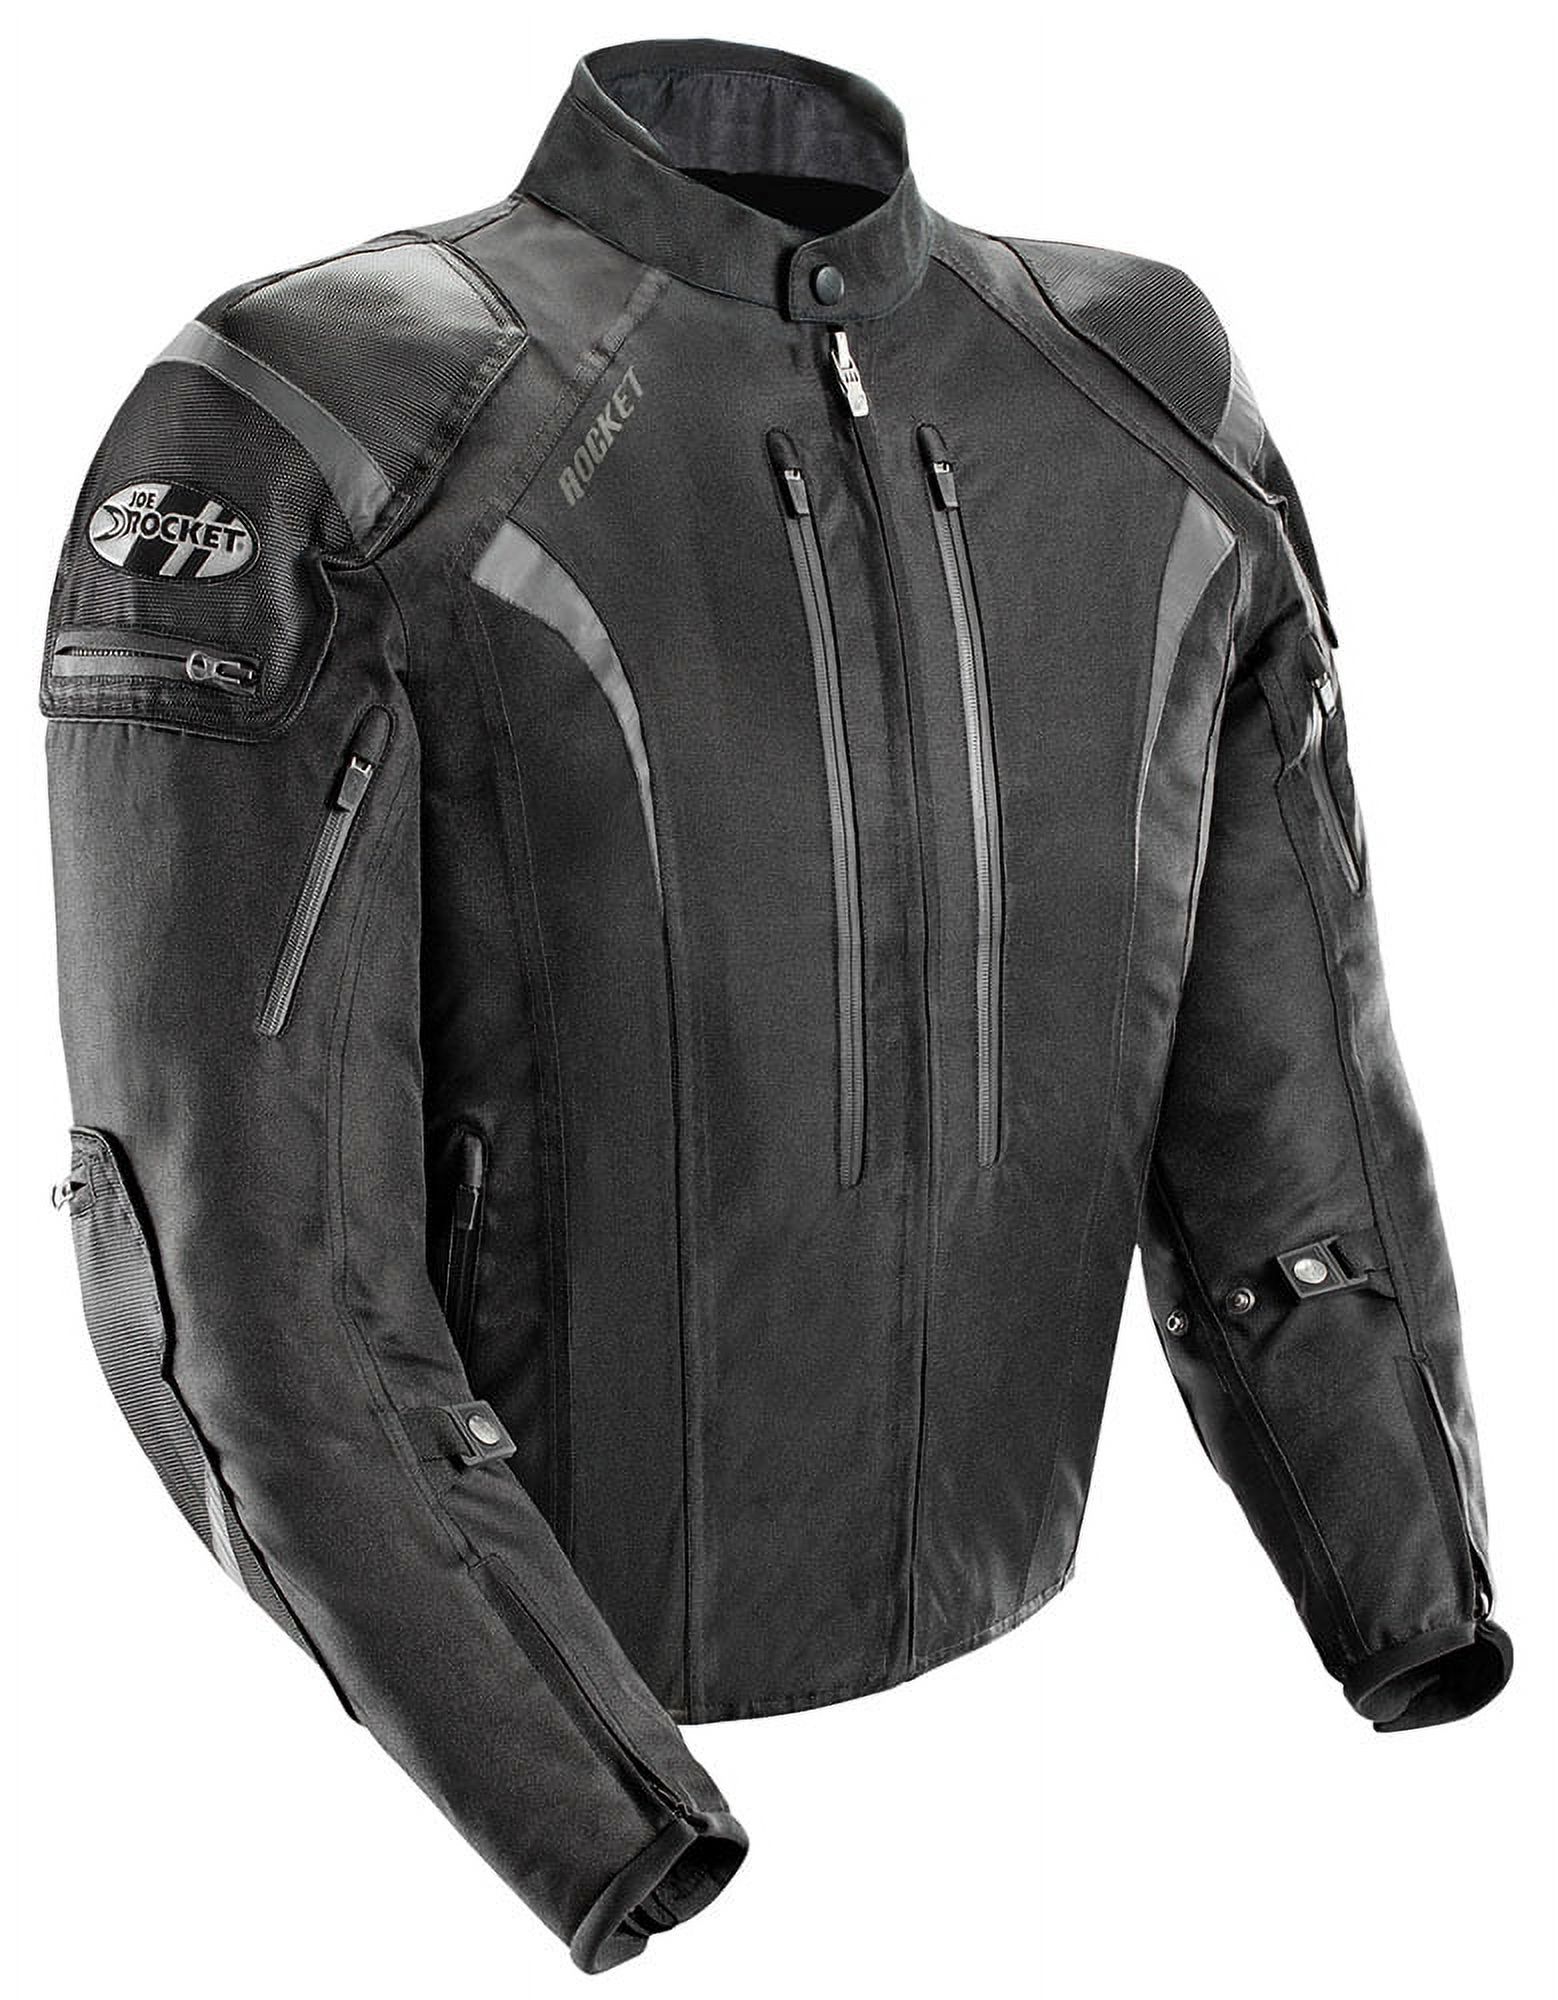 Joe Rocket Atomic 5.0 Men's Black Textile Jacket with CE Armor X-Large - image 1 of 7